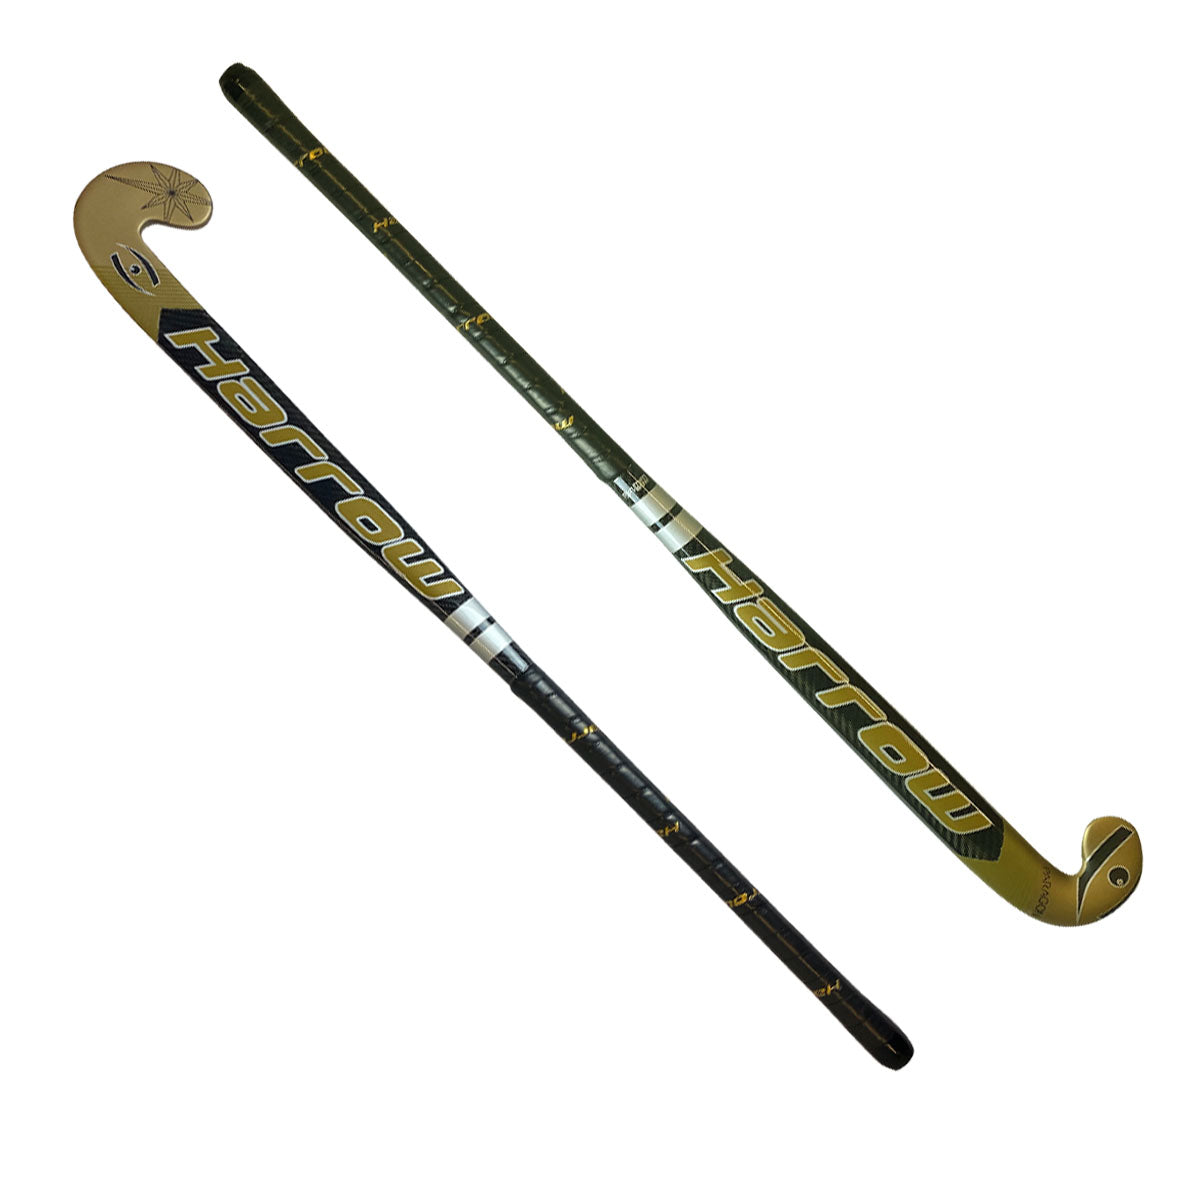 Leegte Wonder sponsor Paragon 45 Field Hockey Stick – Harrow Sports